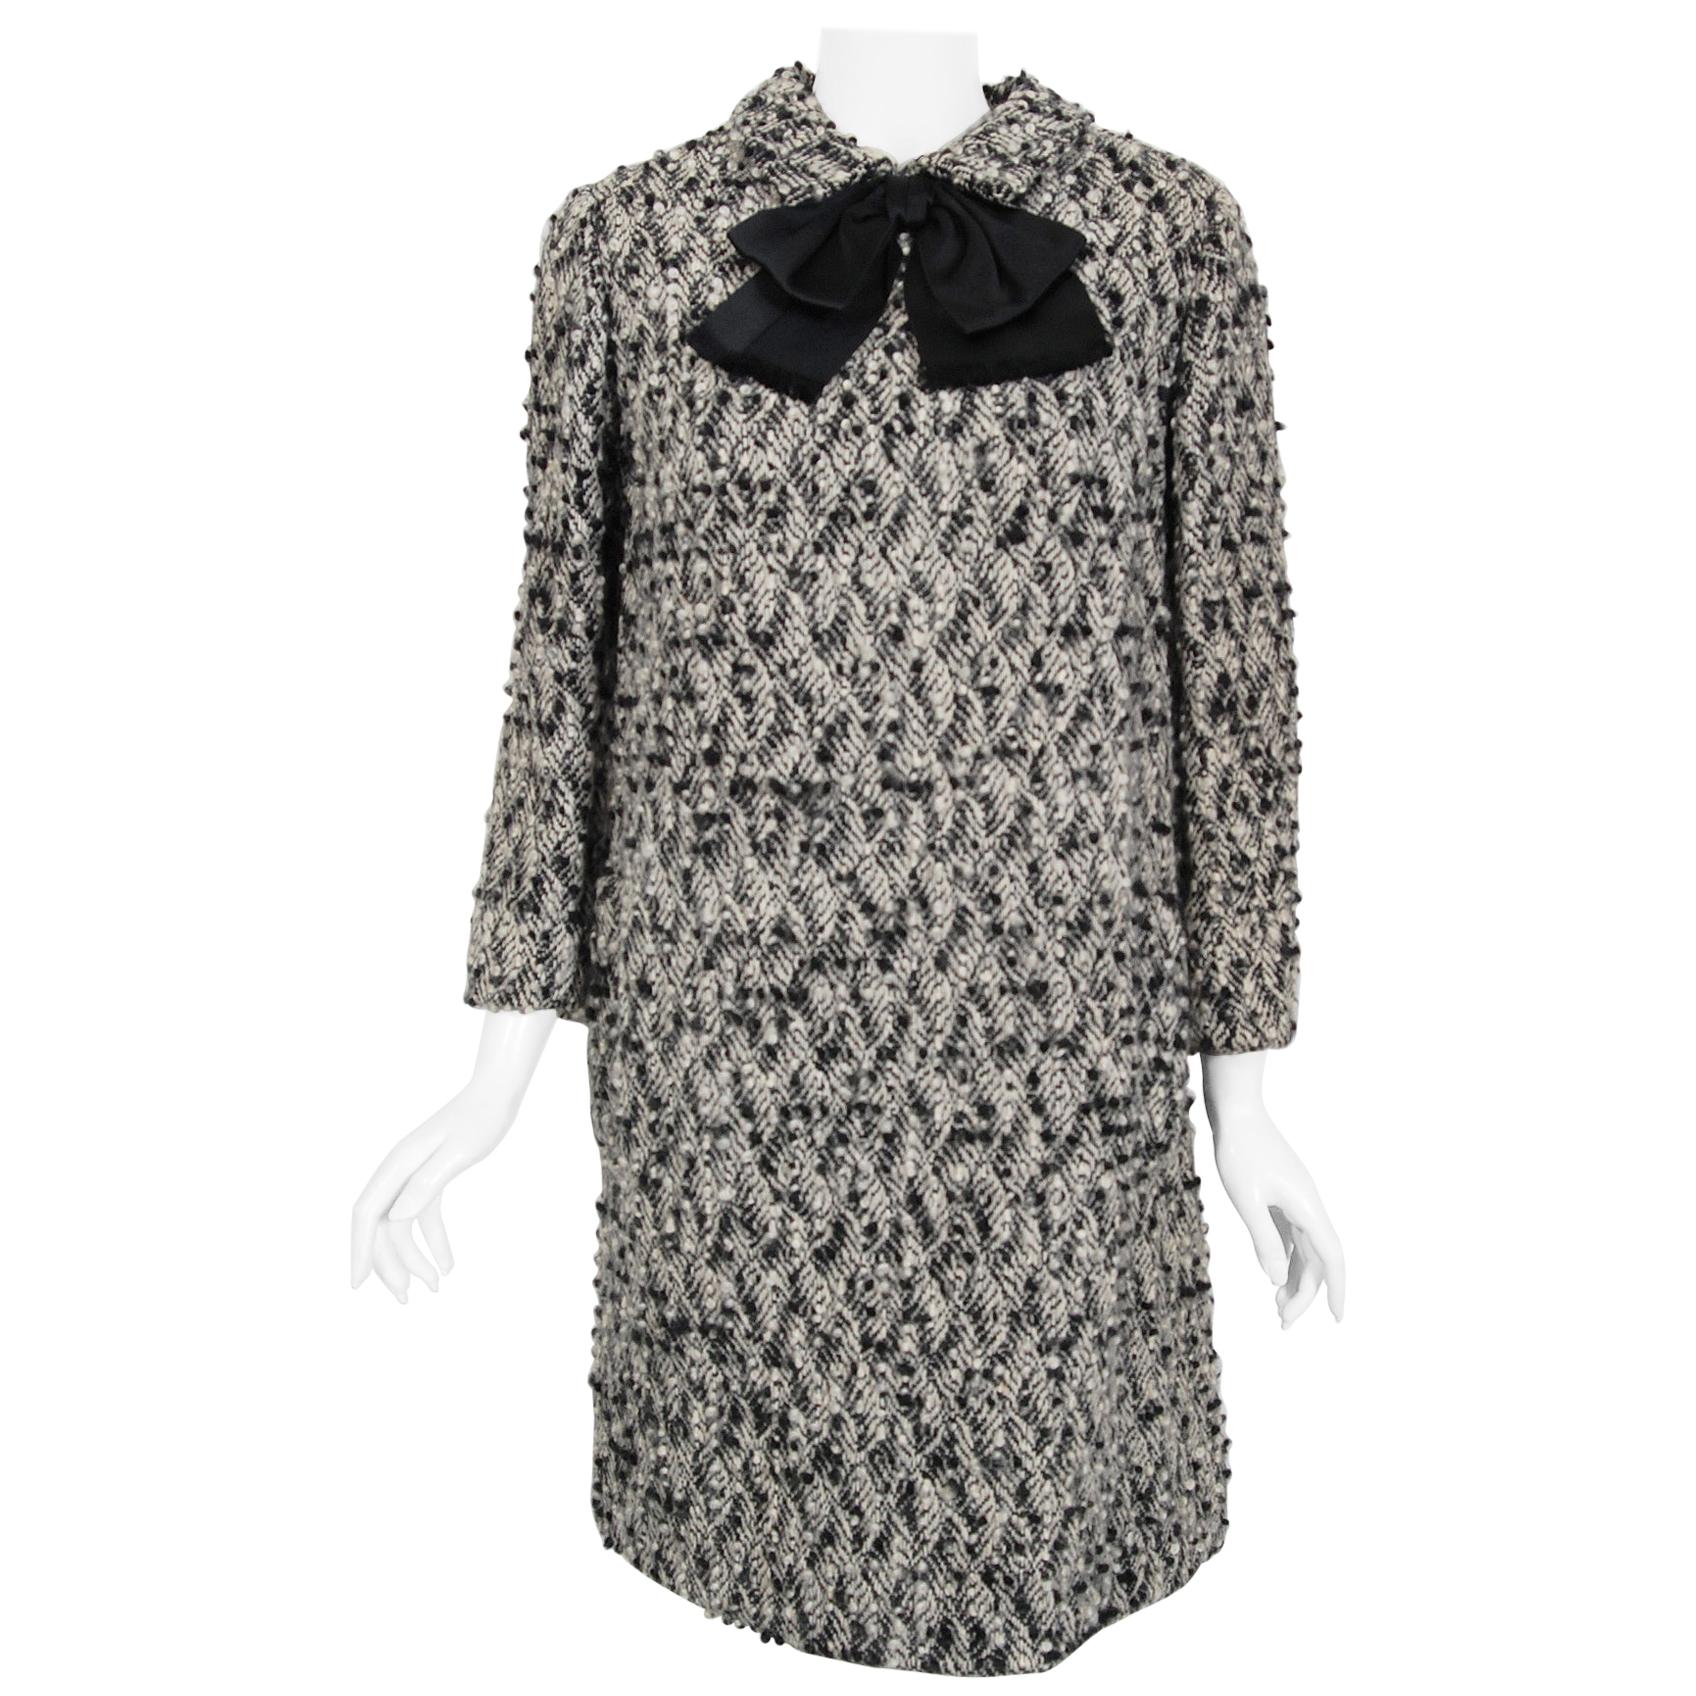 1965 Bill Blass Black & Ivory Textured Wool Dolly-Bow Mod Pockets Coat Dress